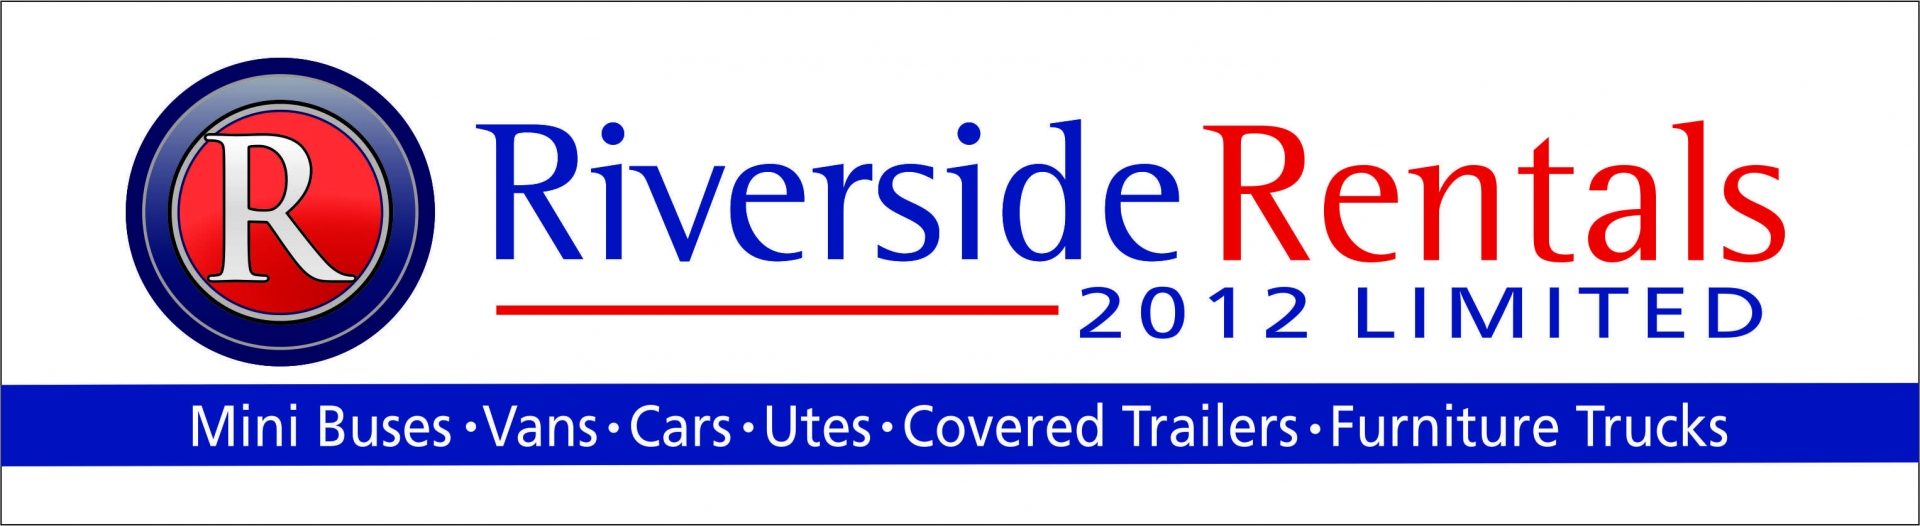 Riverside Rentals 2012 logo